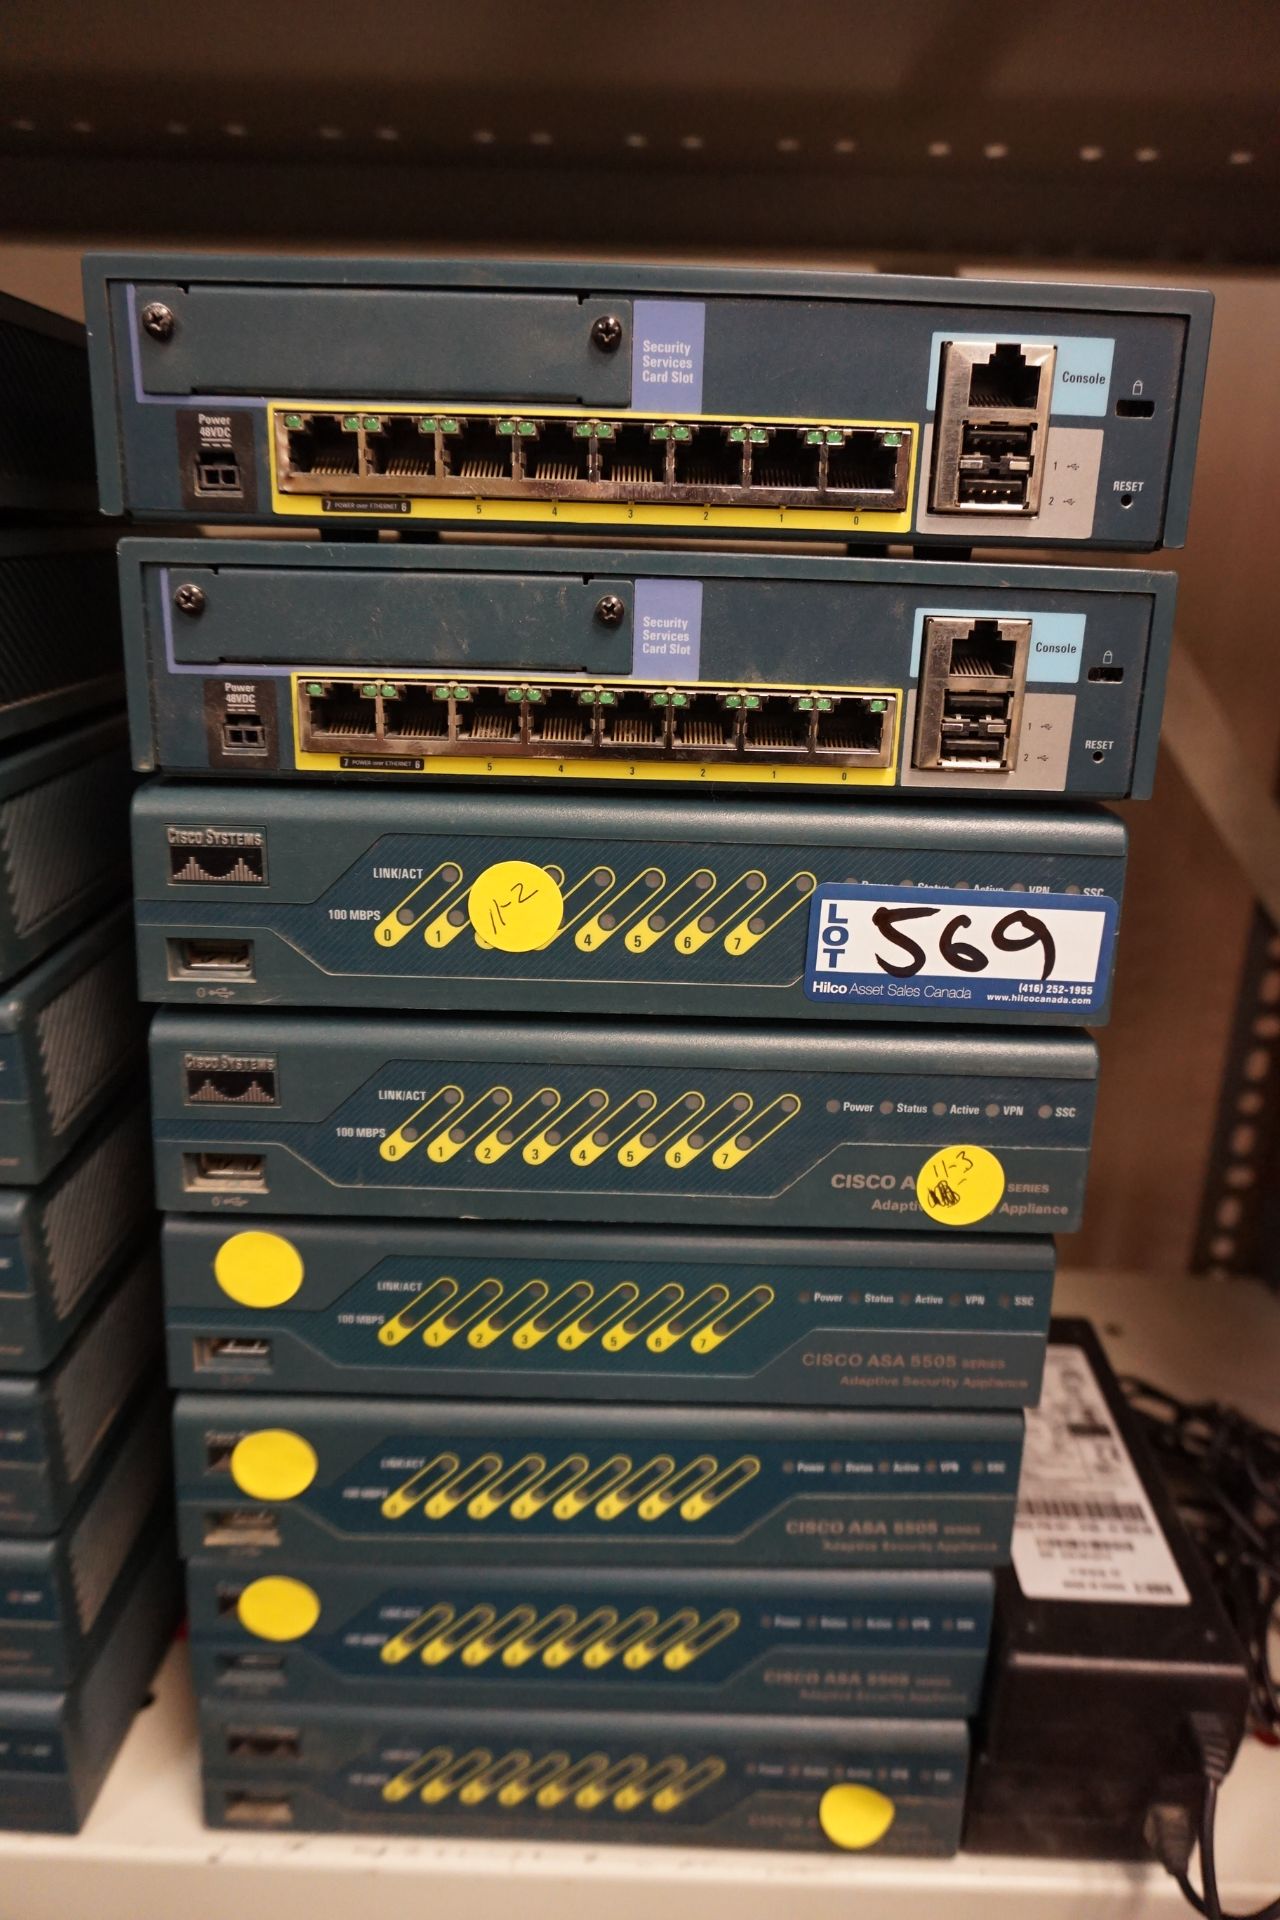 Cisco Model ASA 5505 Series Adaptive Security Appliance Interfaces